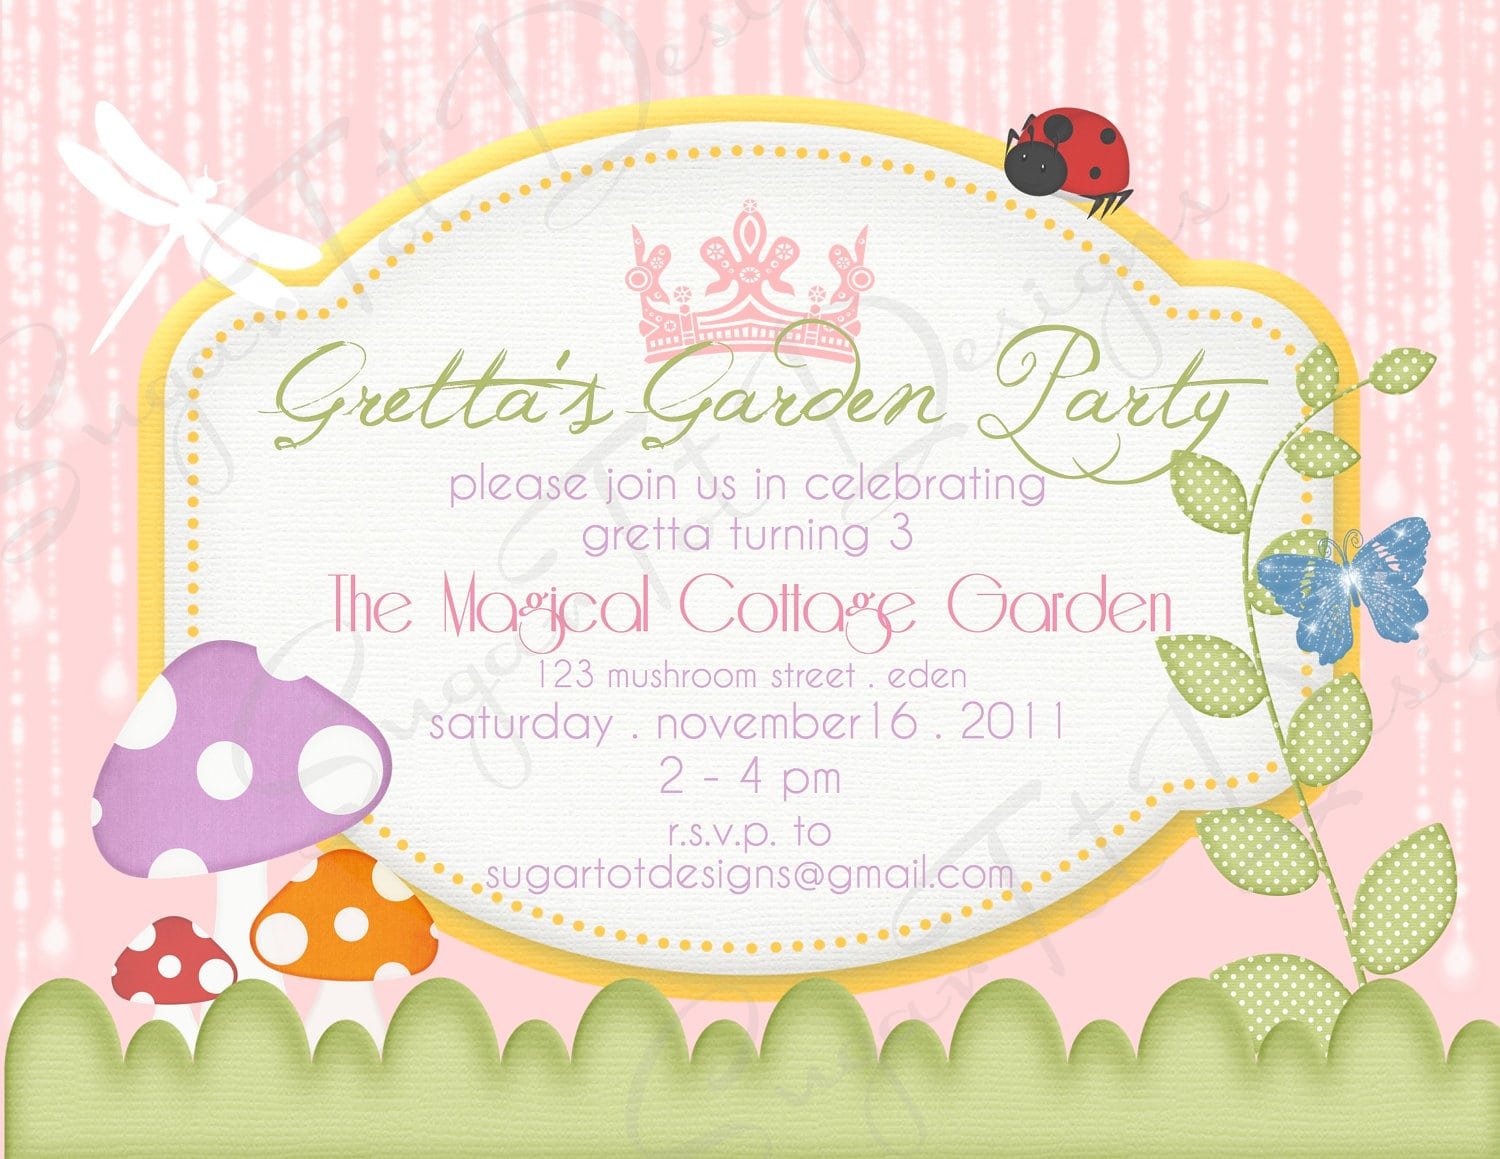 Garden Party Birthday Invitation With Fairies, Snails, Mushrooms